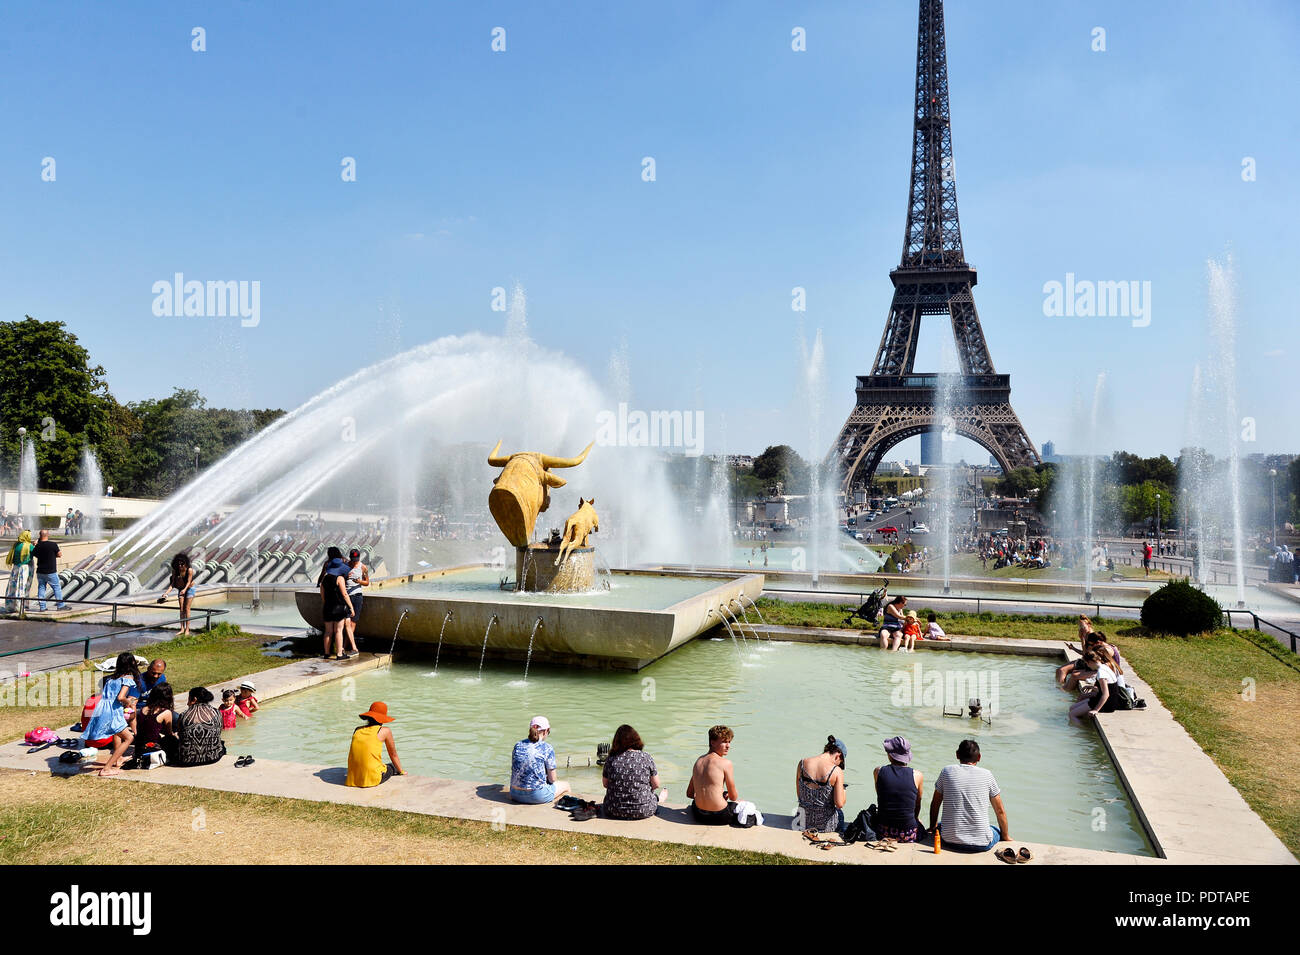 Heat wave in Paris - Trocadéro - Paris - France Stock Photo